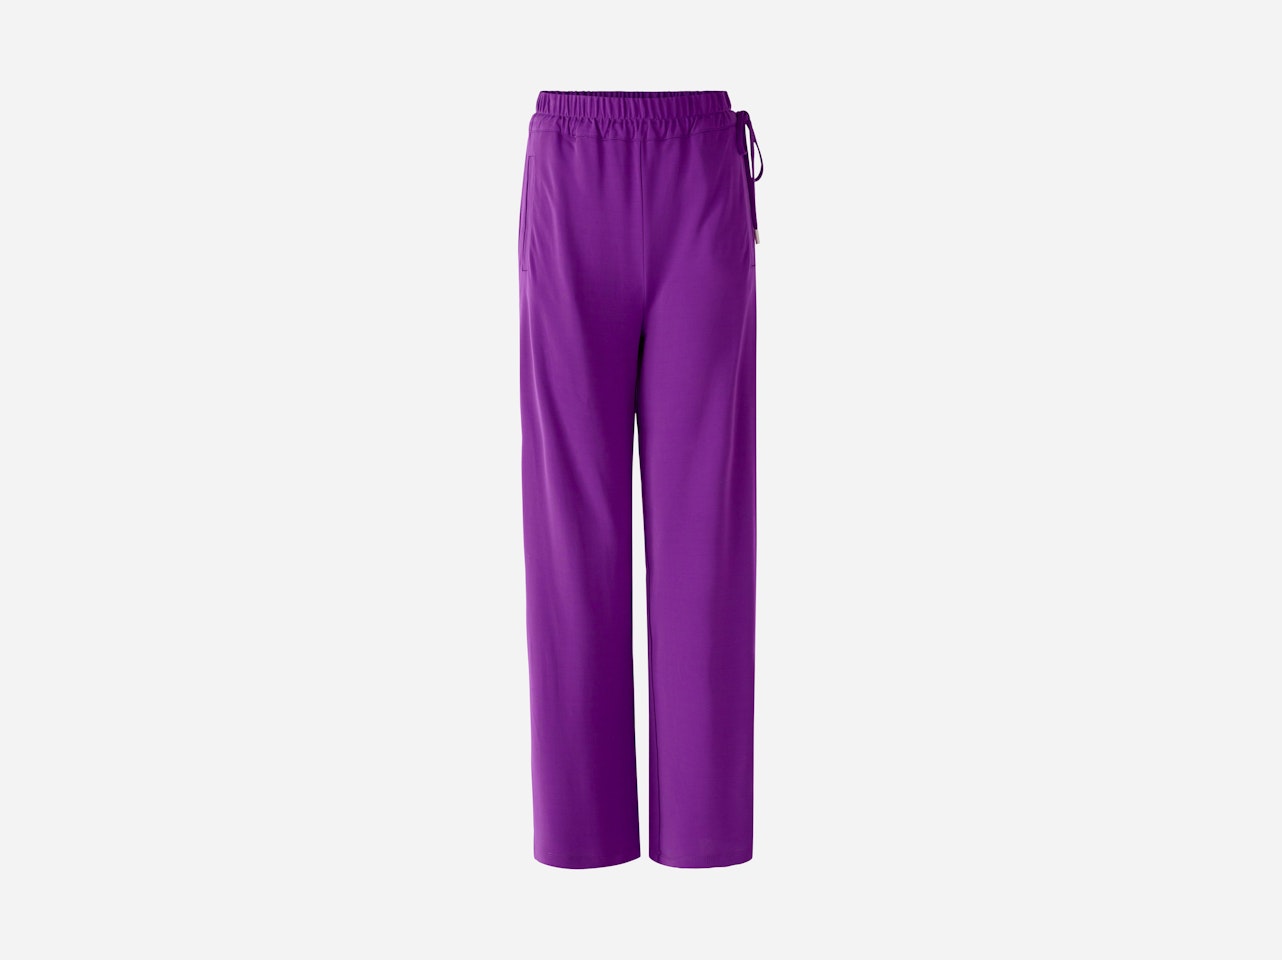 Bild 1 von Jersey trousers - Jogger style in purple magic | Oui